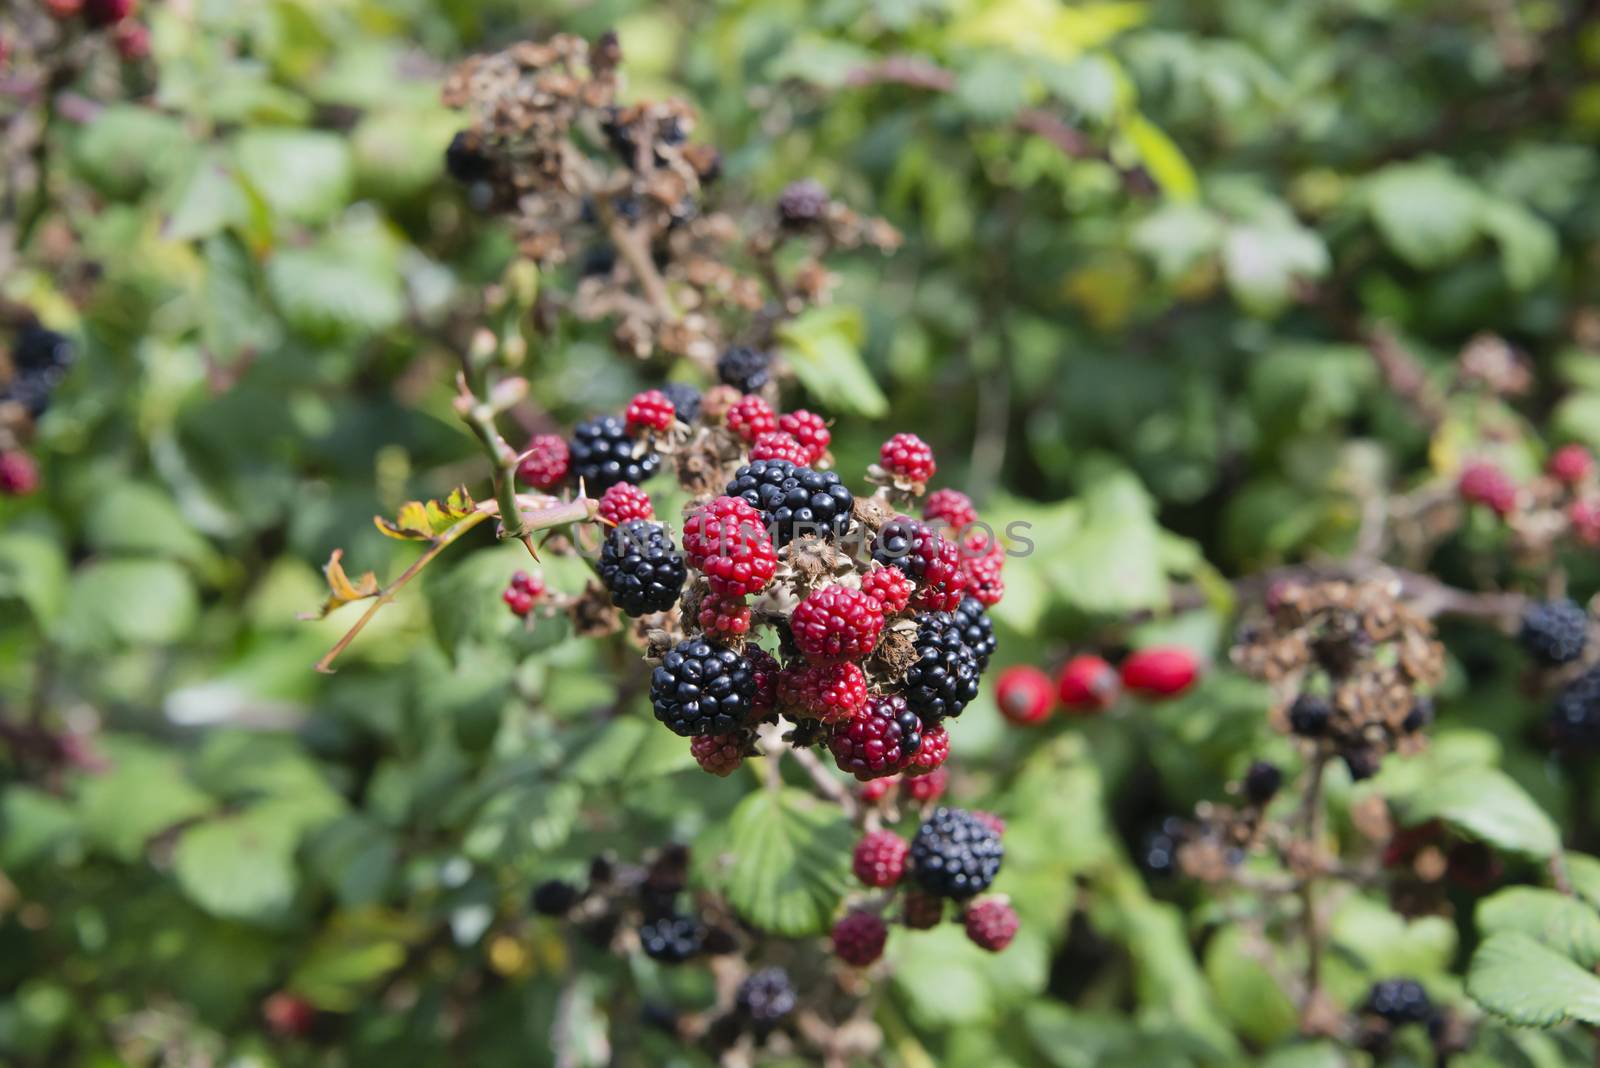 Blackberry bunch on a bush in a garden in England